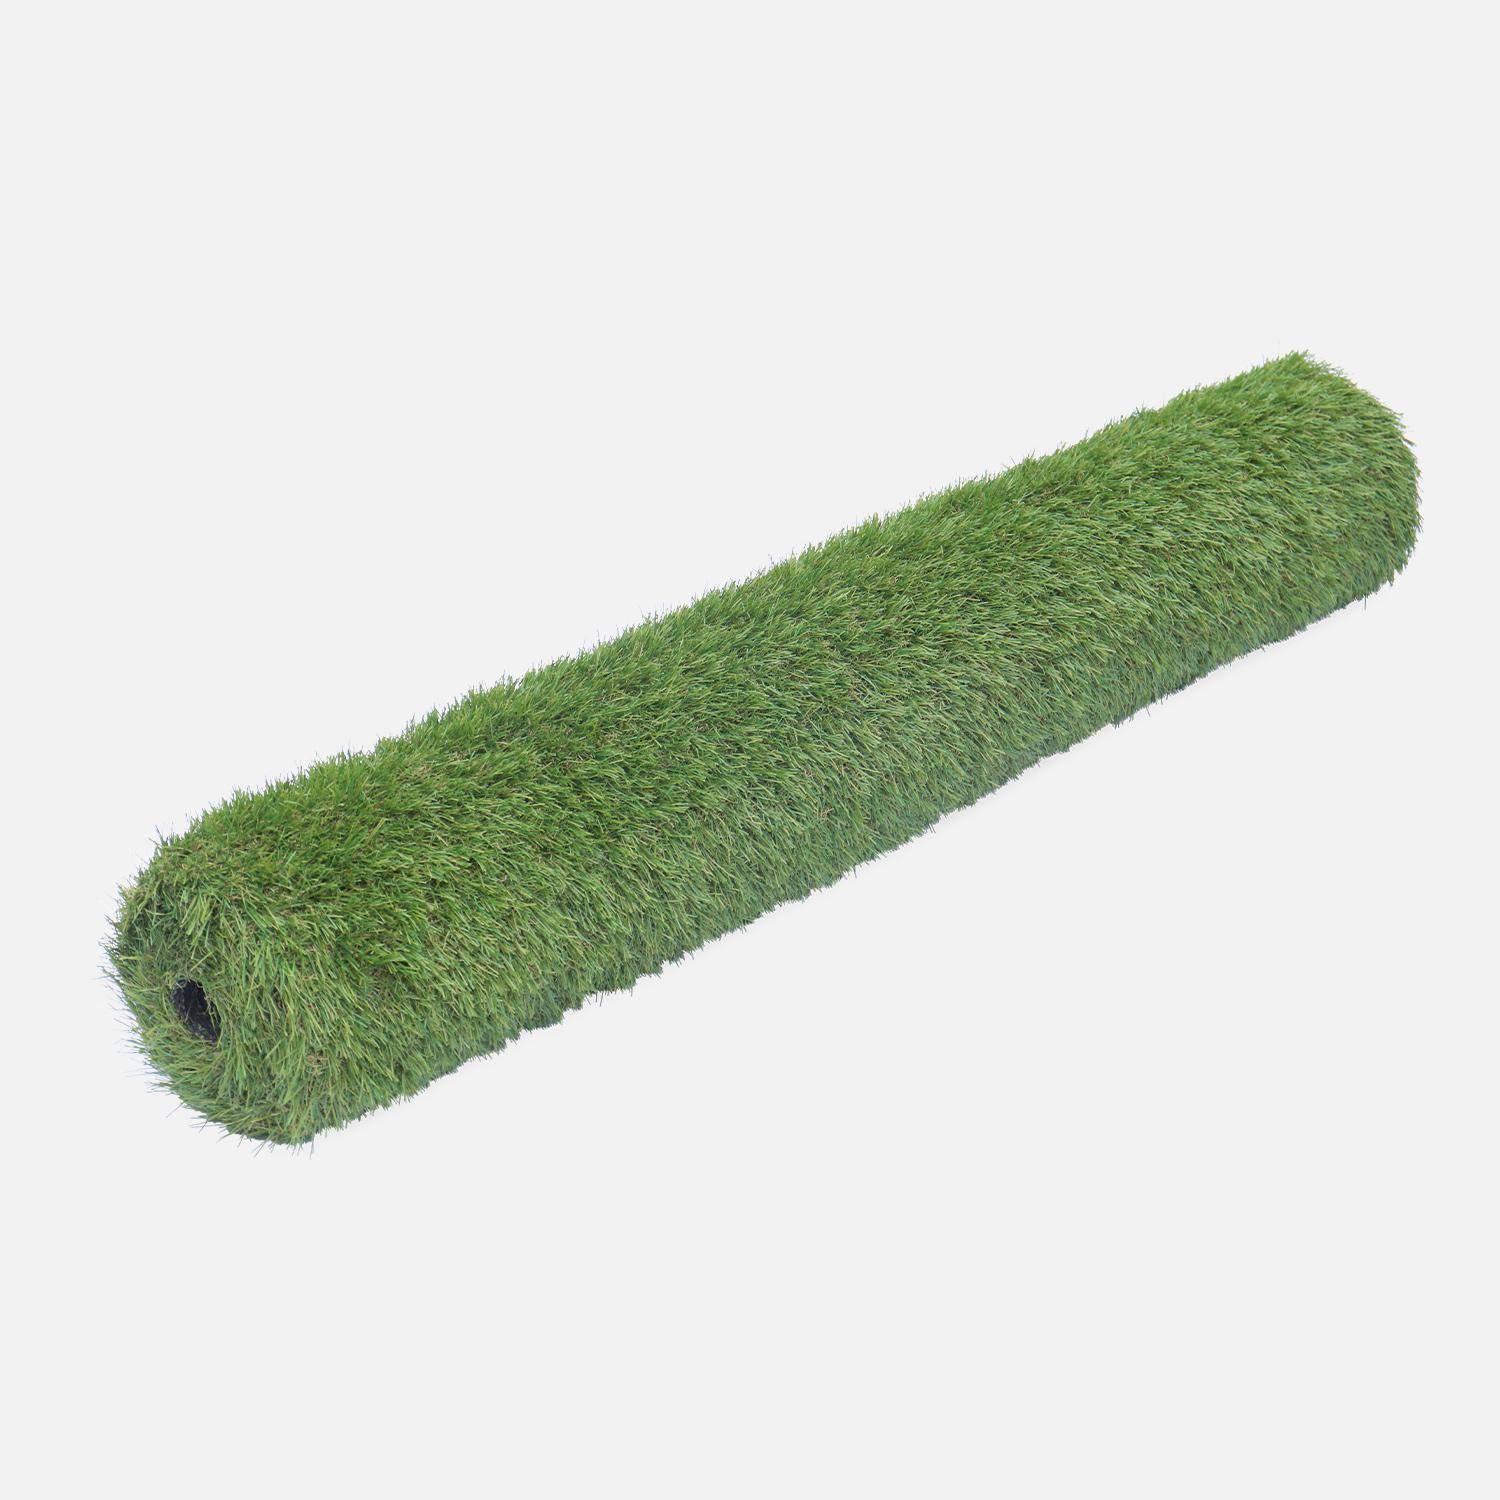 Synthetisch gras 2x5m, dragen, smaragdgroen, kaki groen en beige, 35mm,sweeek,Photo2